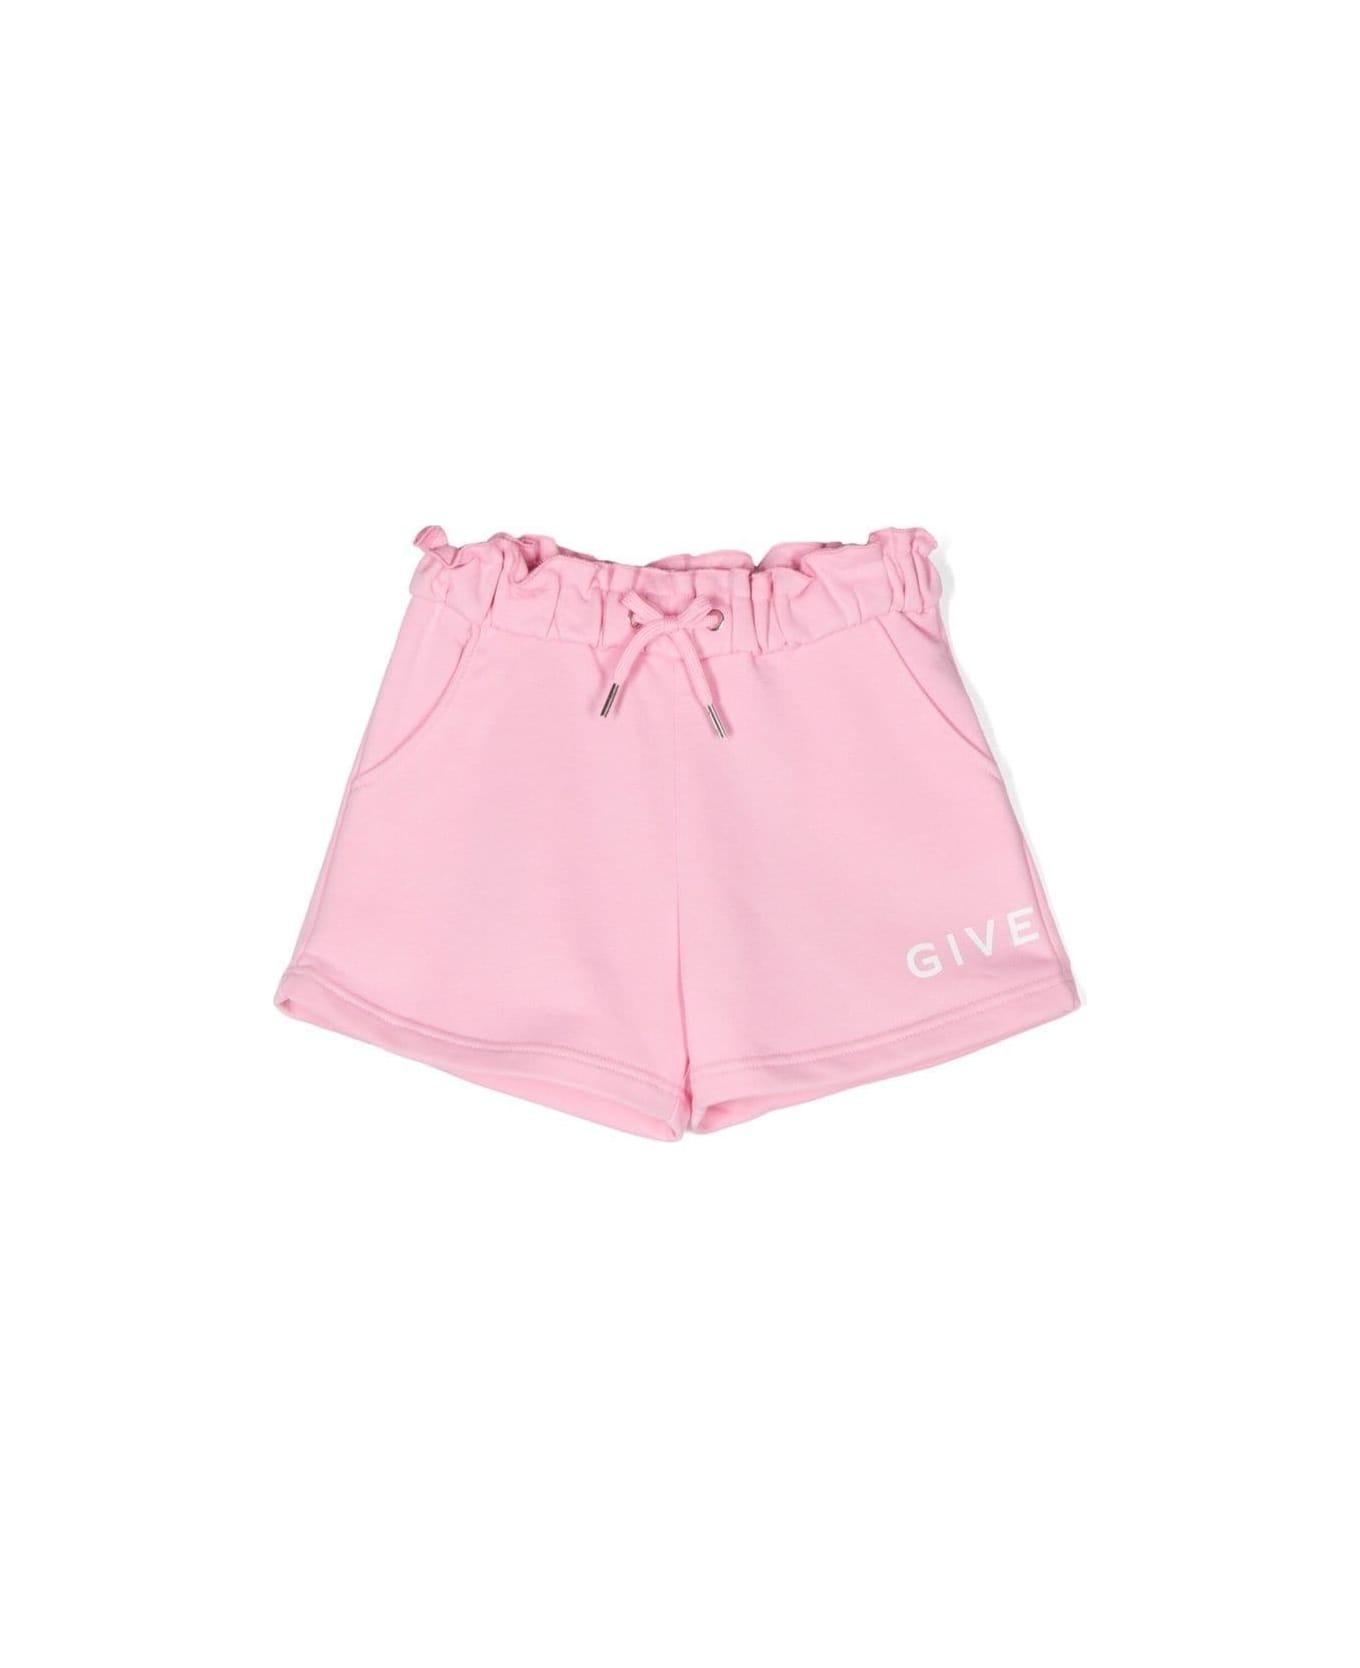 Givenchy Pink Drawstring Bermuda Shorts With Logo Print In Cotton Blend Girl - Pink